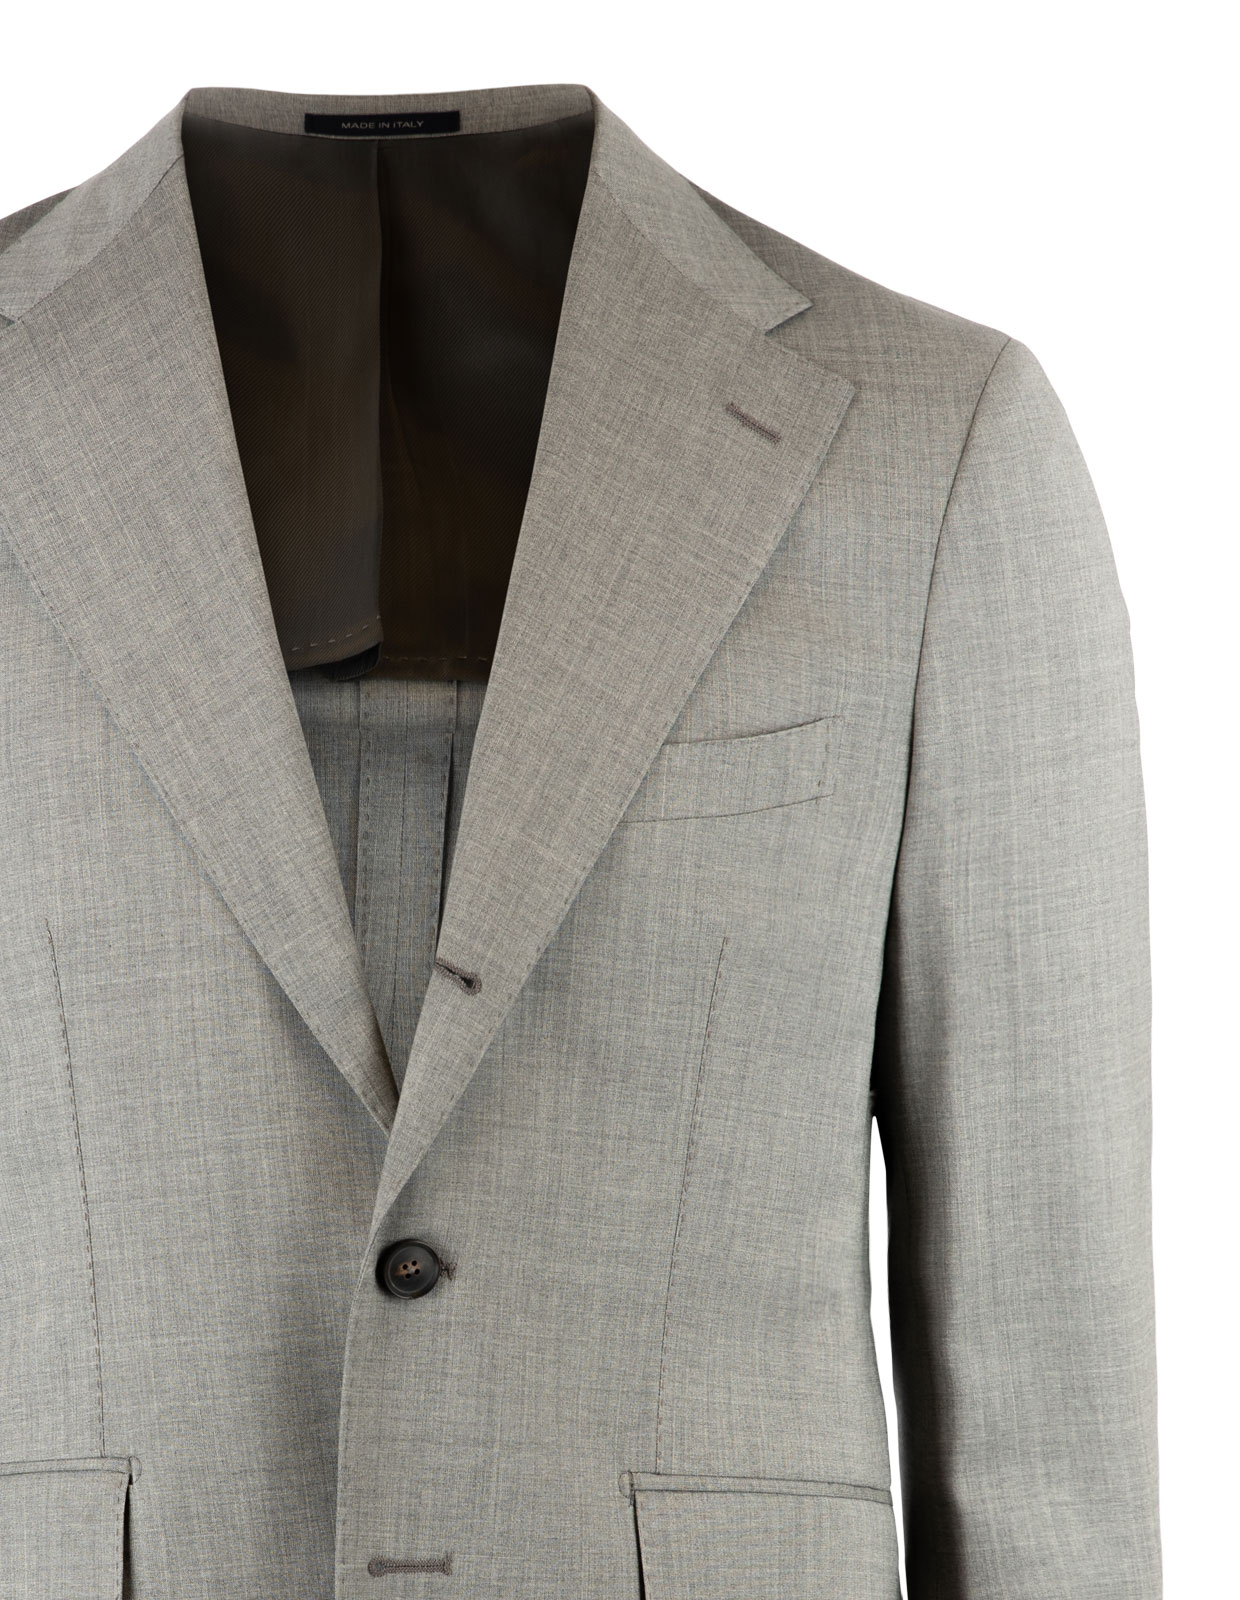 Napoli Suit Wool Light Grey